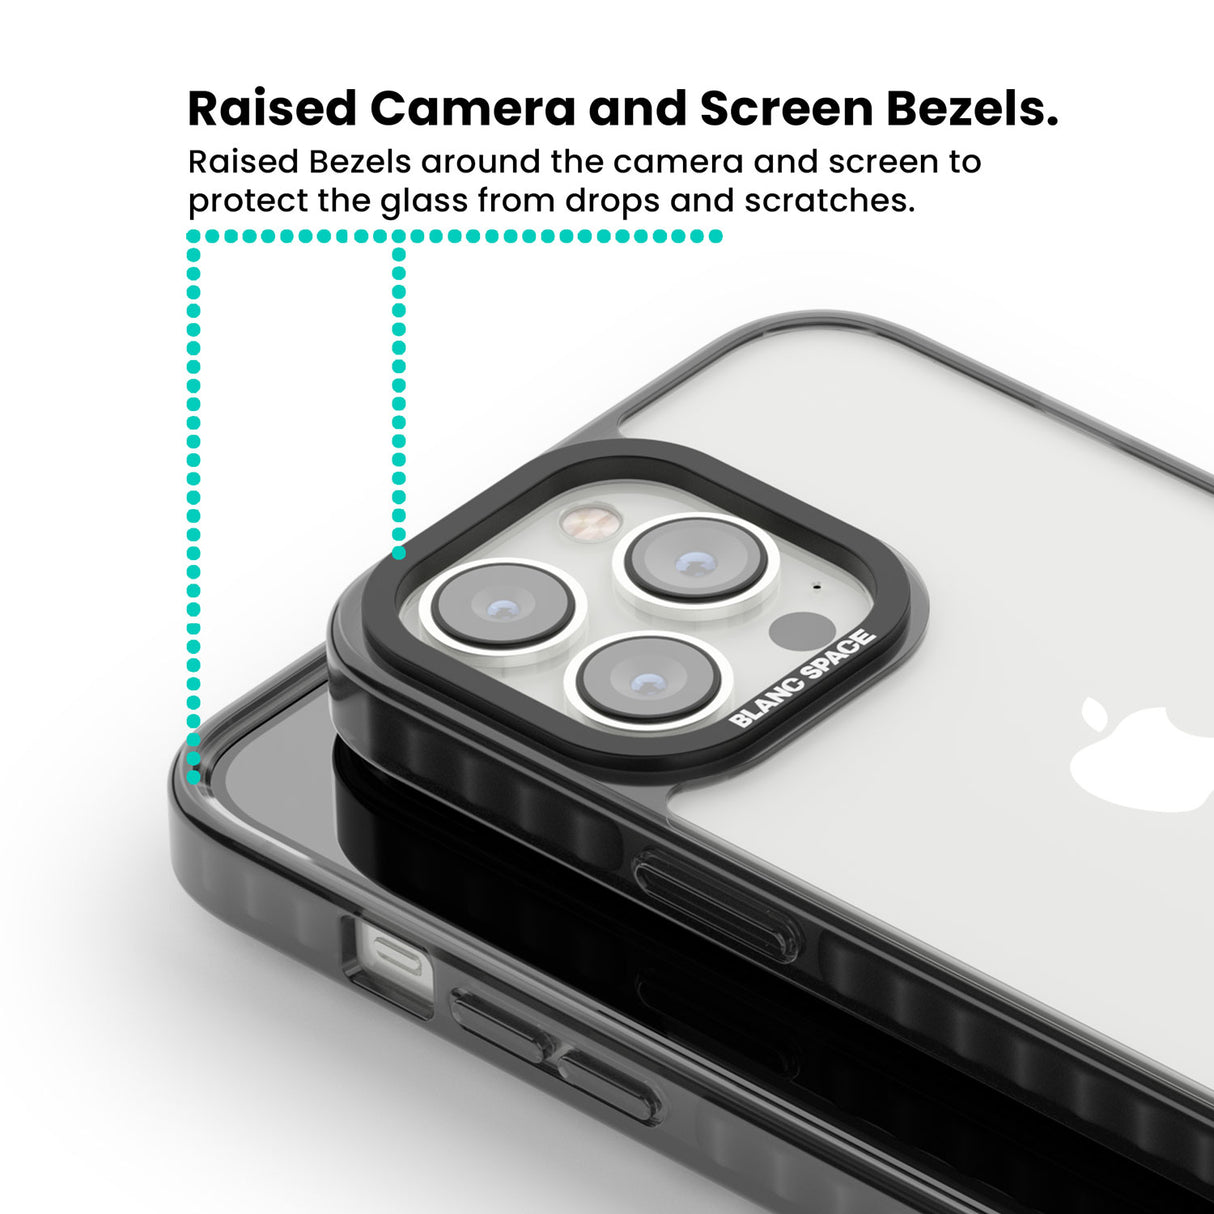 Personalised Cherry Pattern Black Impact Phone Case for iPhone 13 Pro, iPhone 14 Pro, iPhone 15 Pro